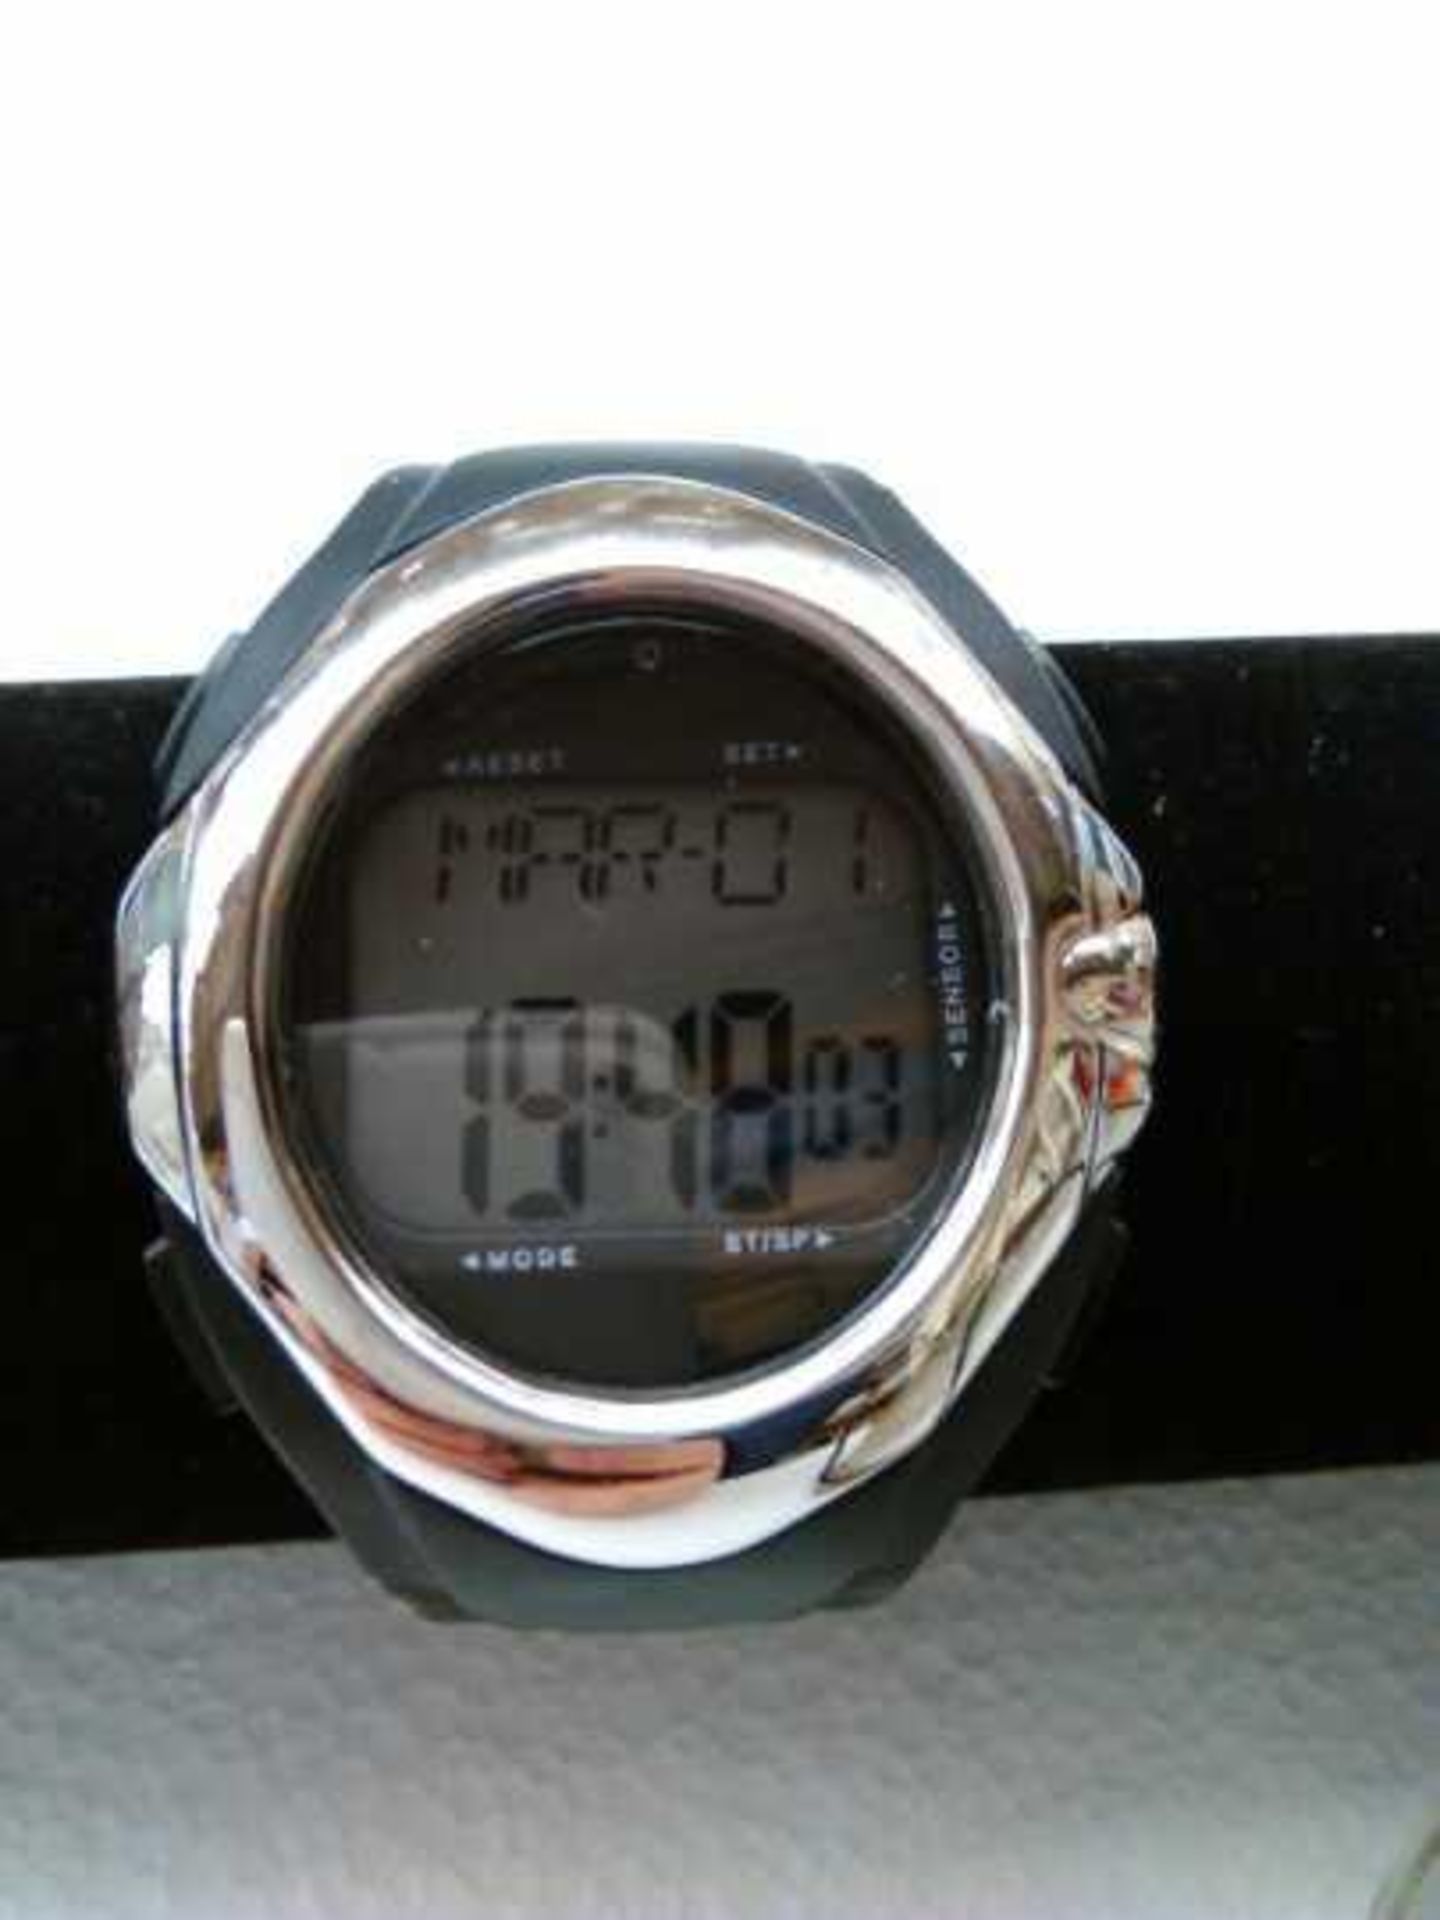 Designer Habitat Pulse rate watch, new and ticking.